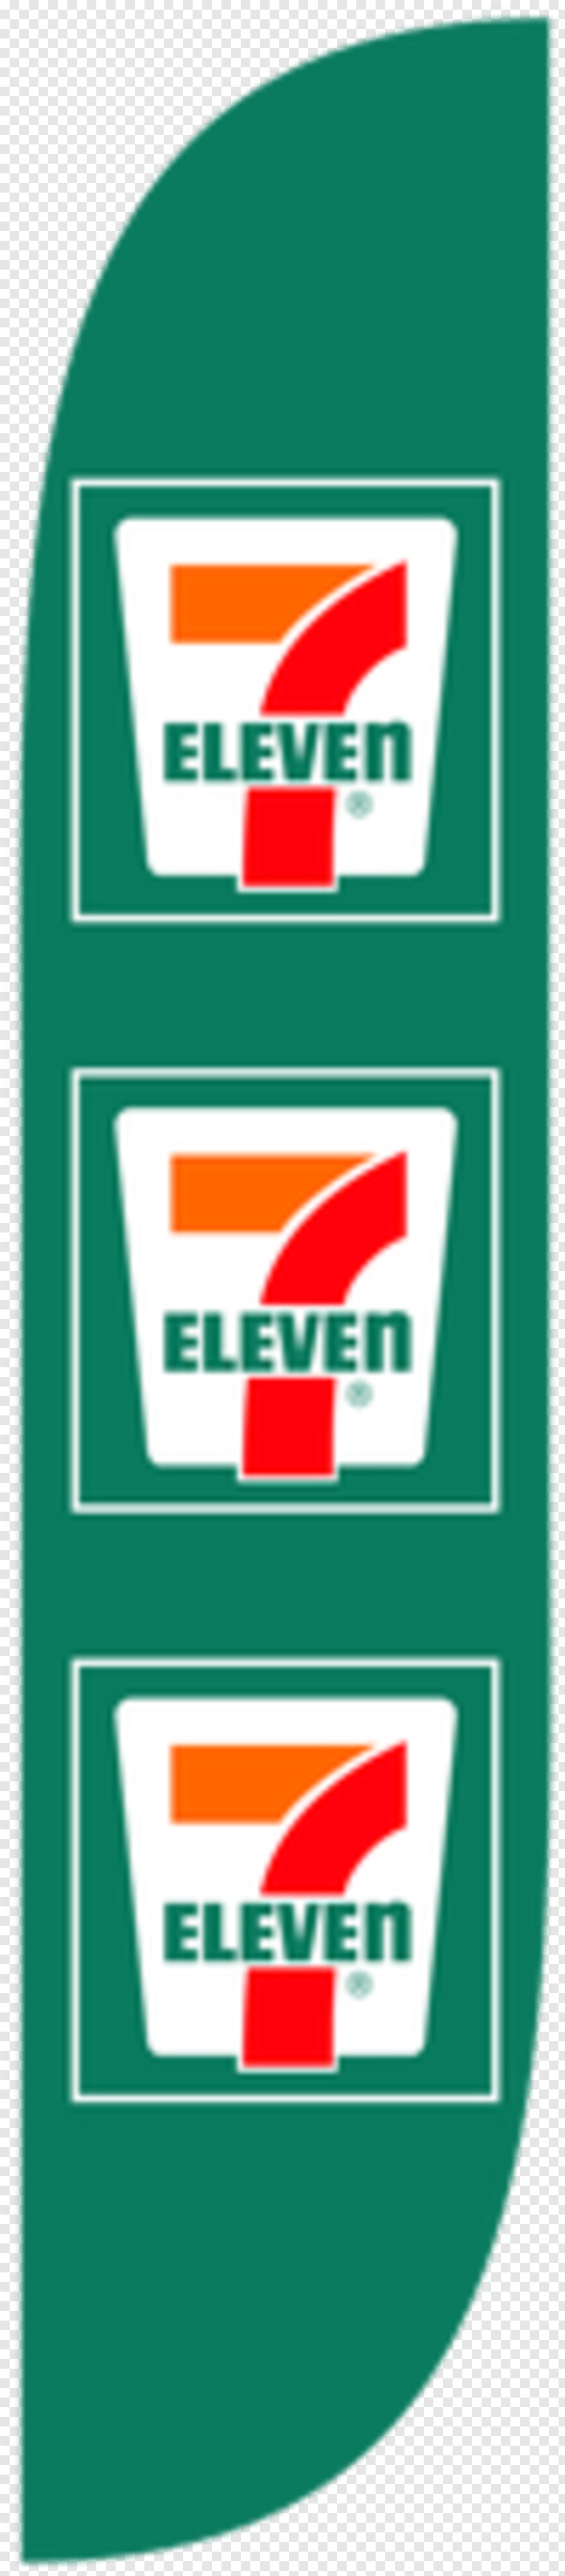 7-eleven-logo # 842472